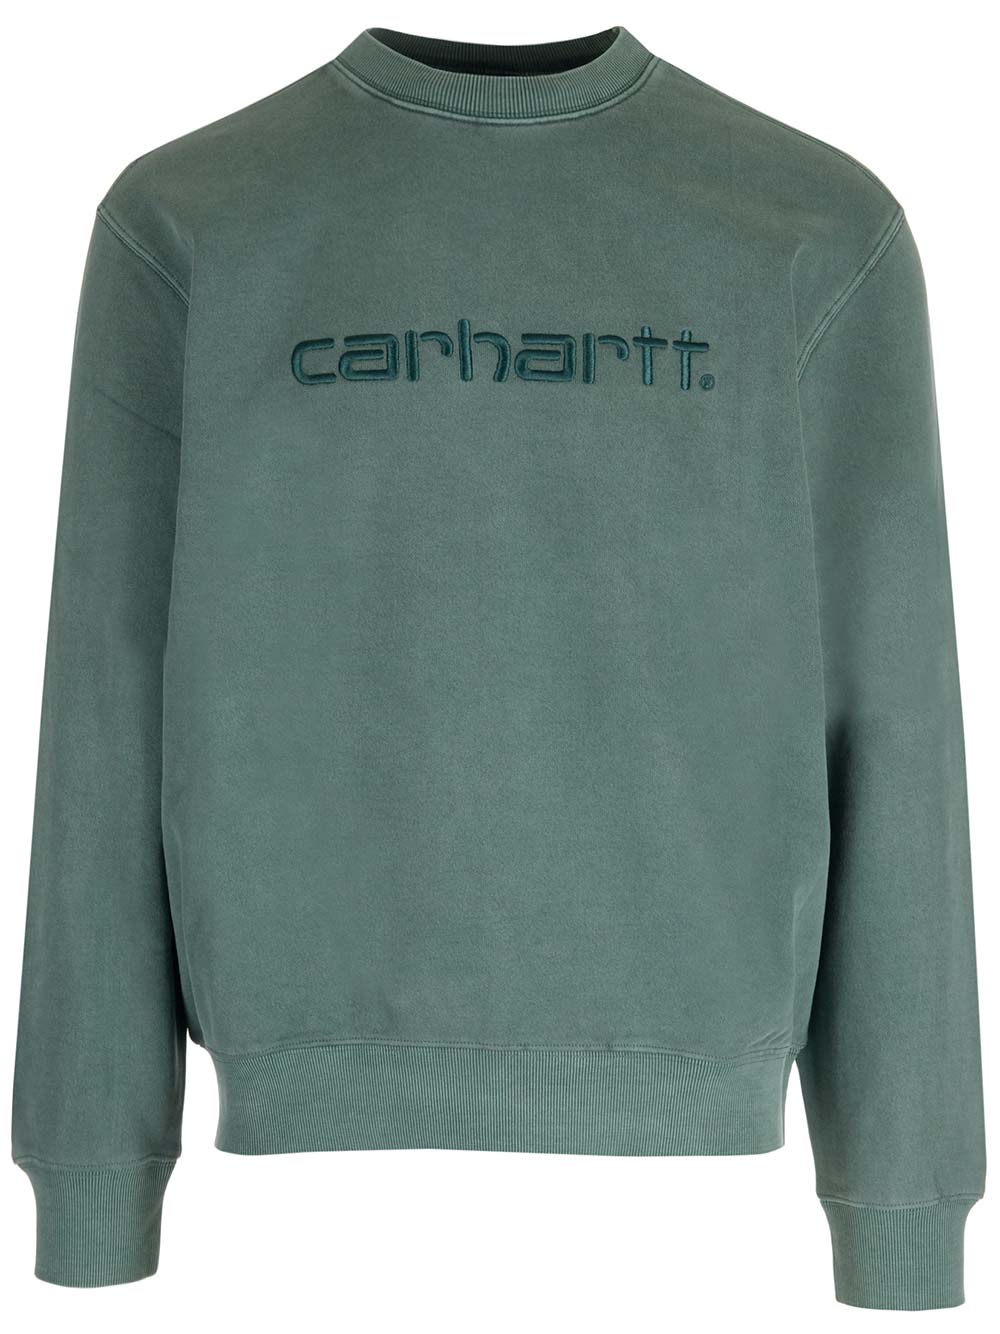 Shop Carhartt Green Logo Sweatshirt